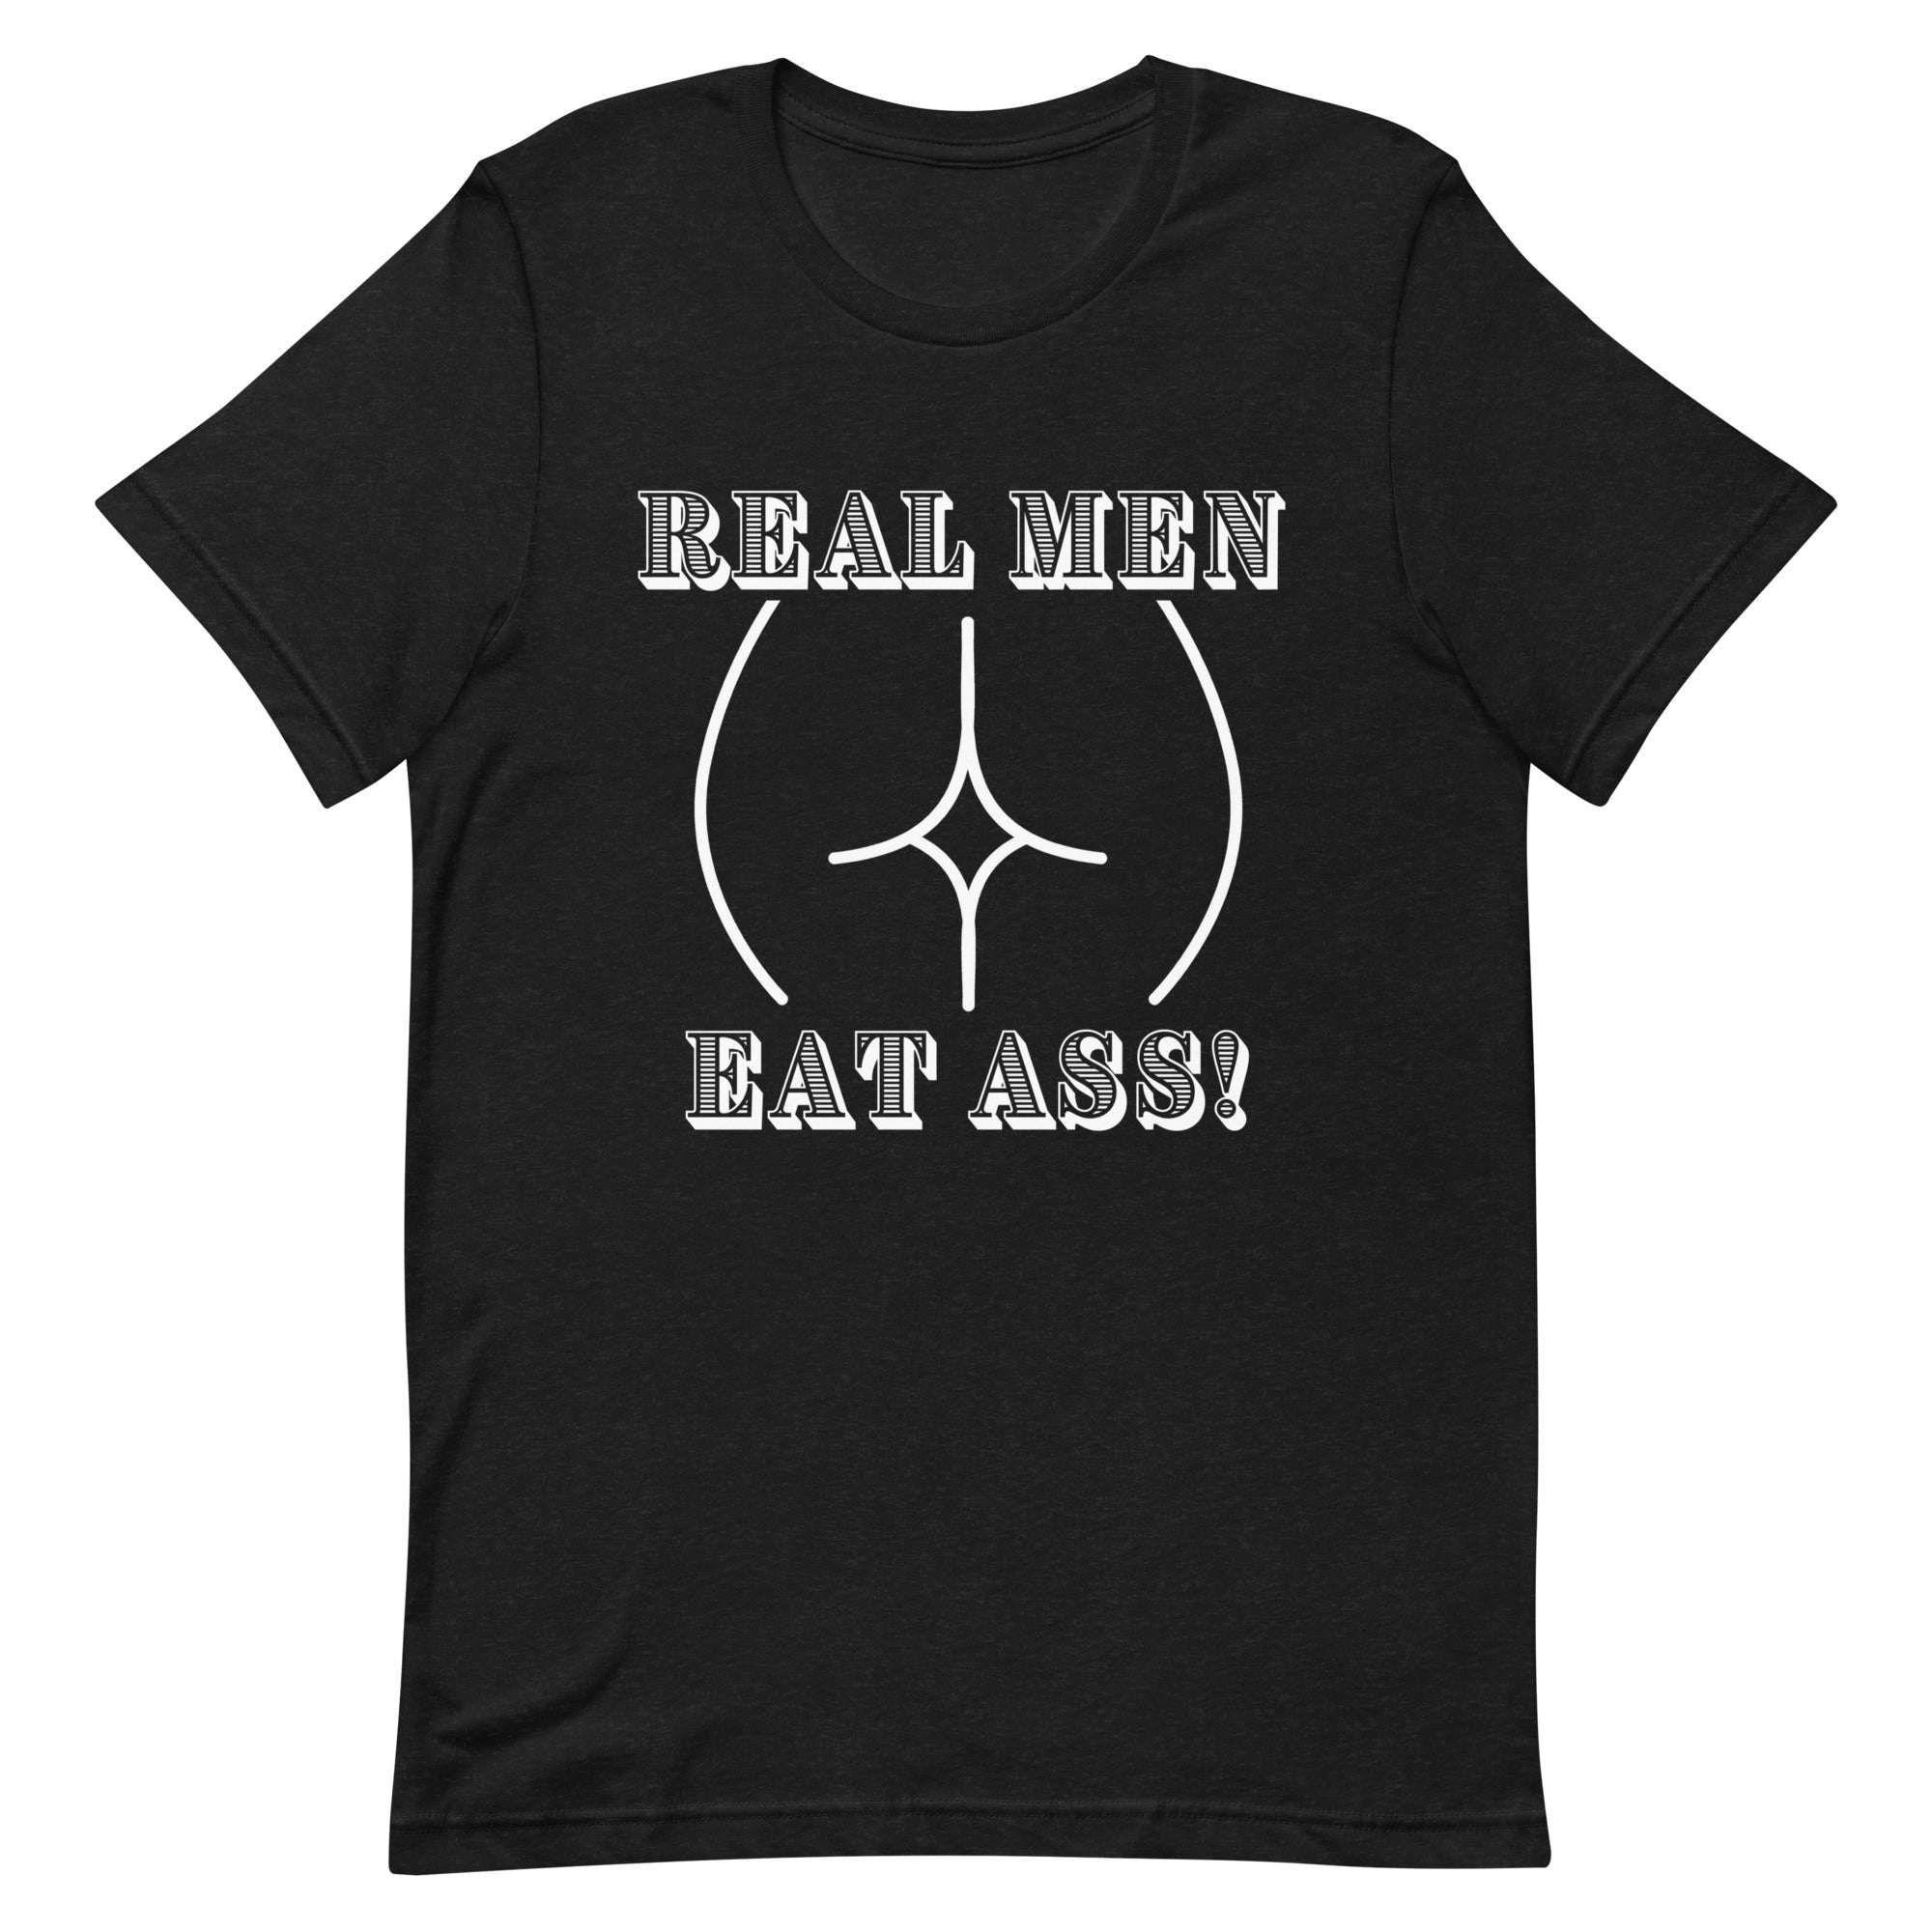 Real Men T-Shirt